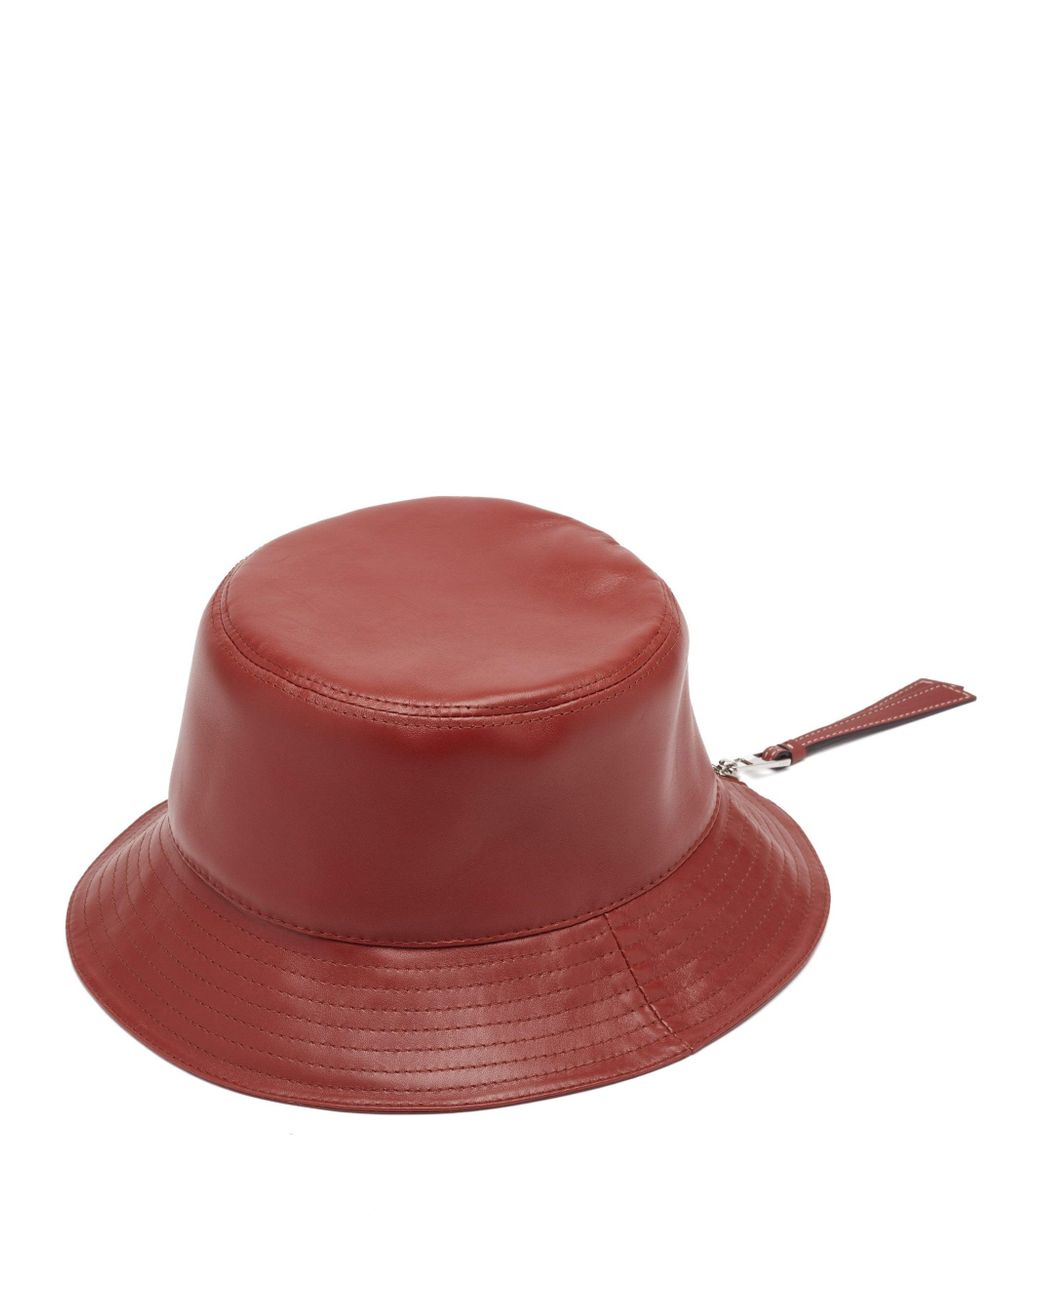 Loewe Fisherman Leather Bucket Hat in Red - Lyst